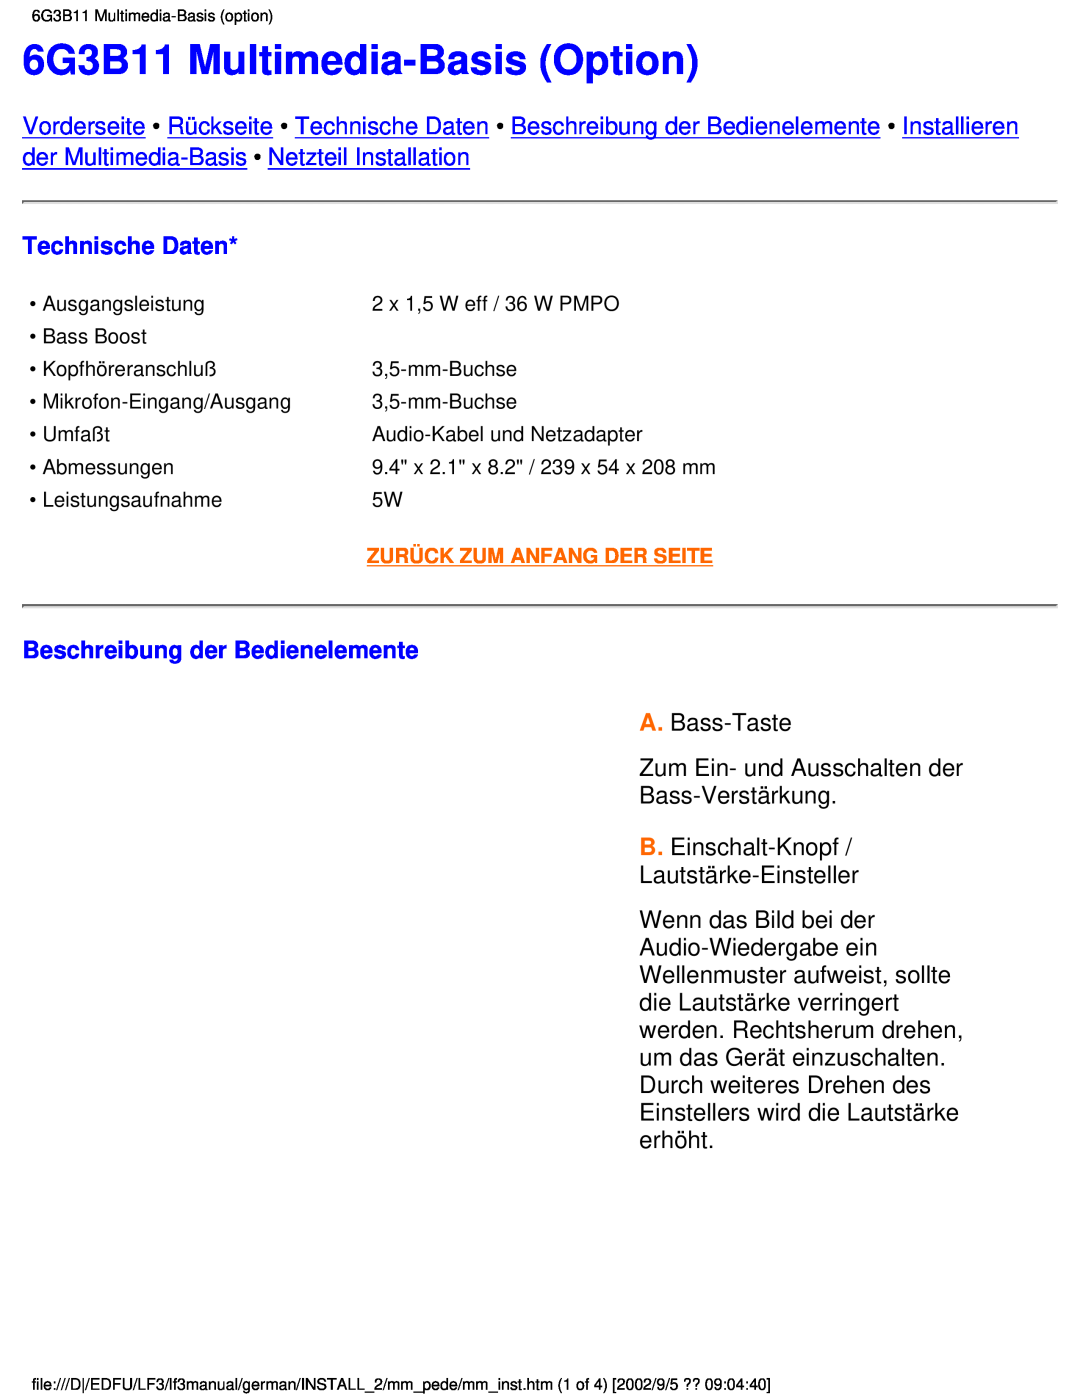 Philips 107E user manual 6G3B11 Multimedia-Basis Option, Technische Daten, Beschreibung der Bedienelemente 